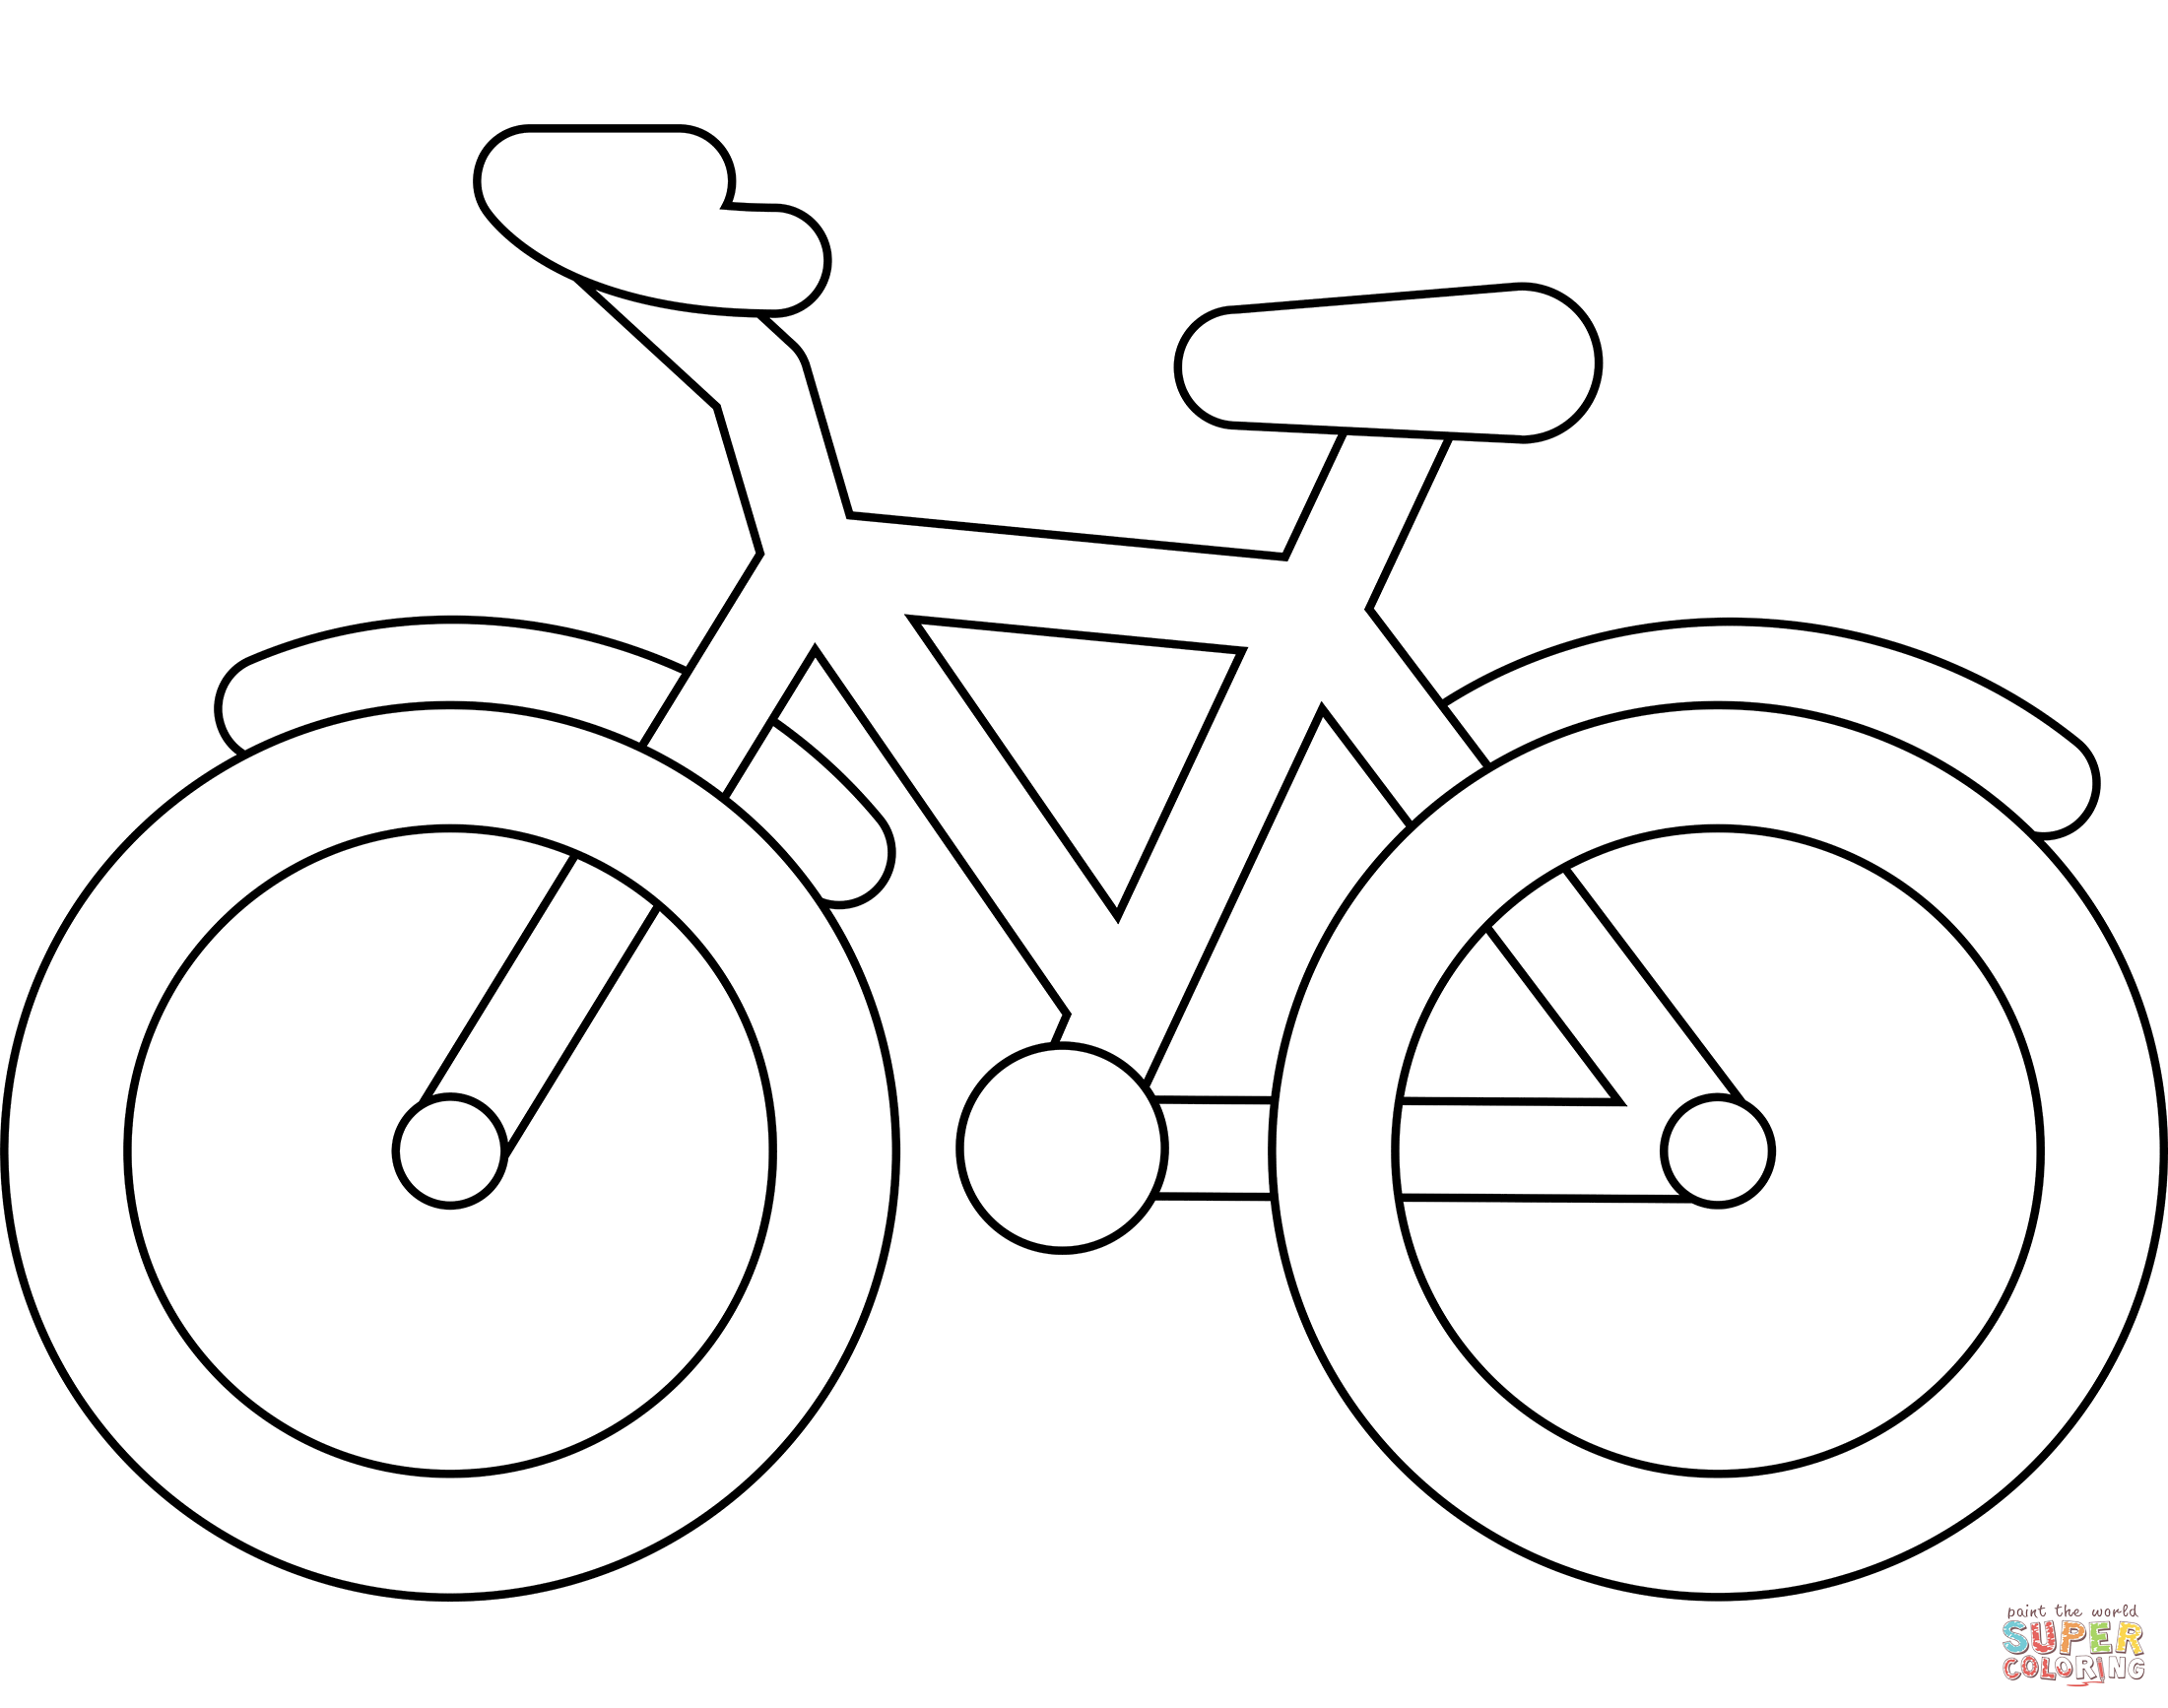 Bicycle emoji coloring page free printable coloring pages